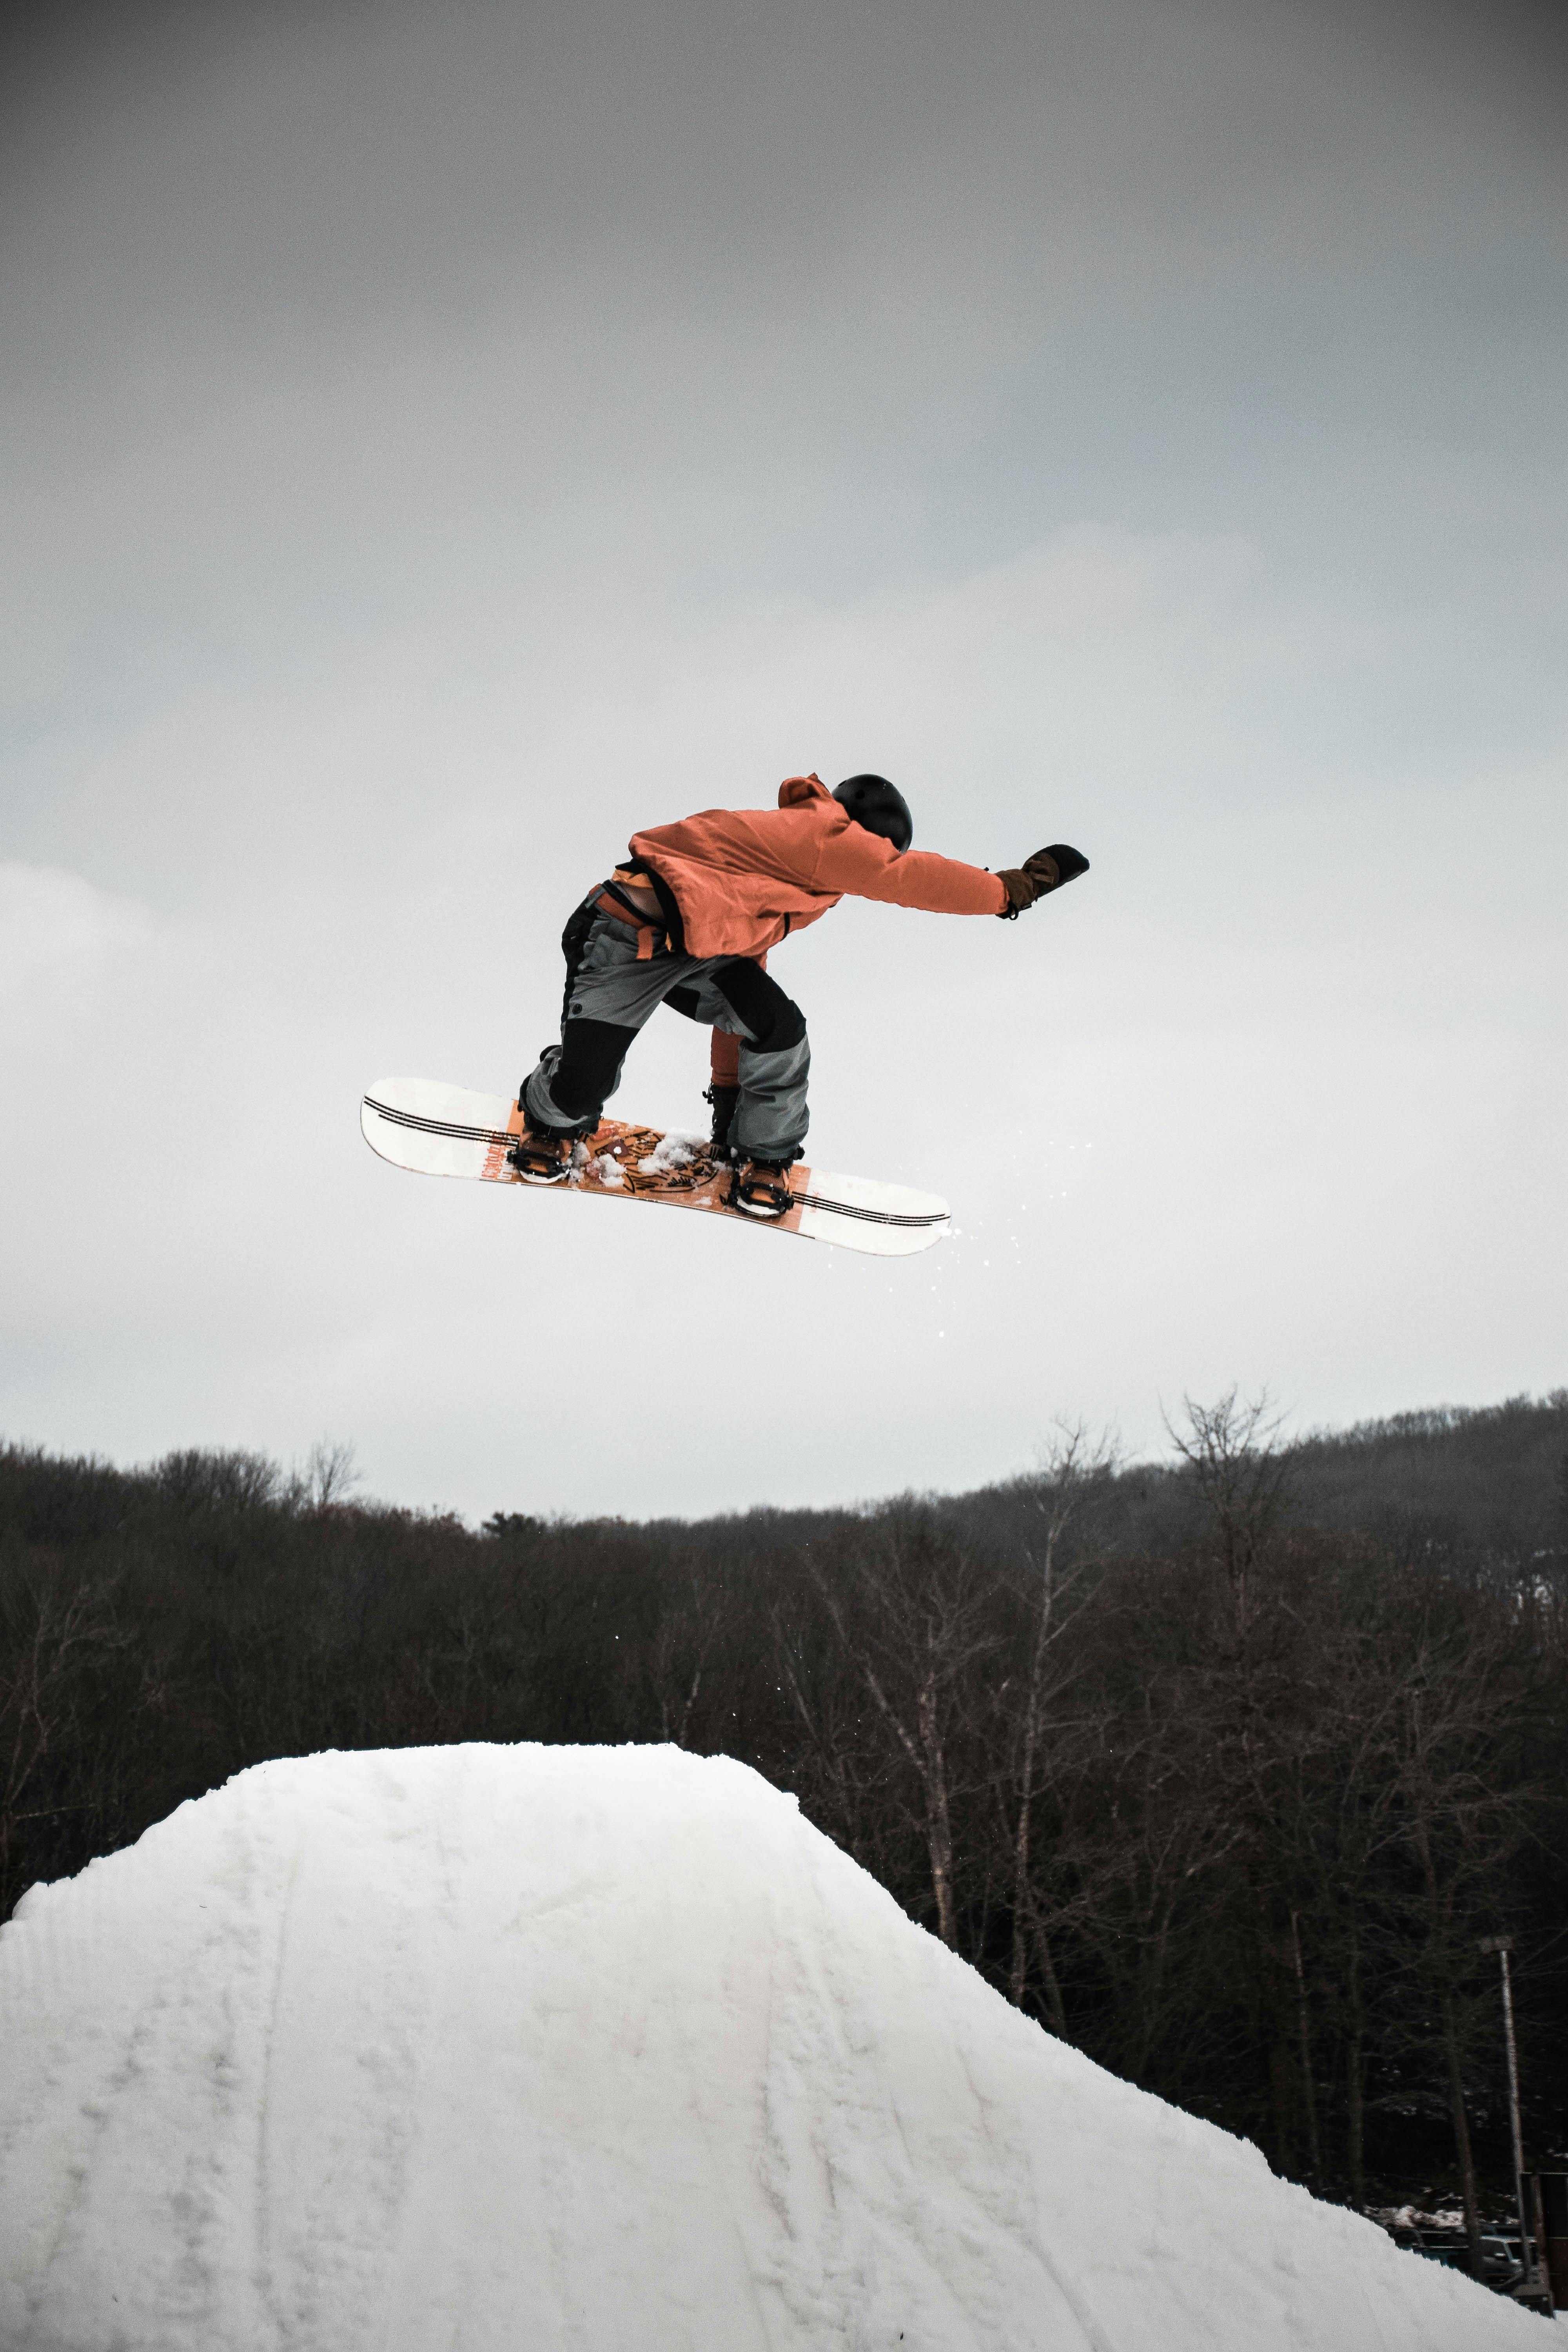 A snowboarder in an orange jacket flies through the air